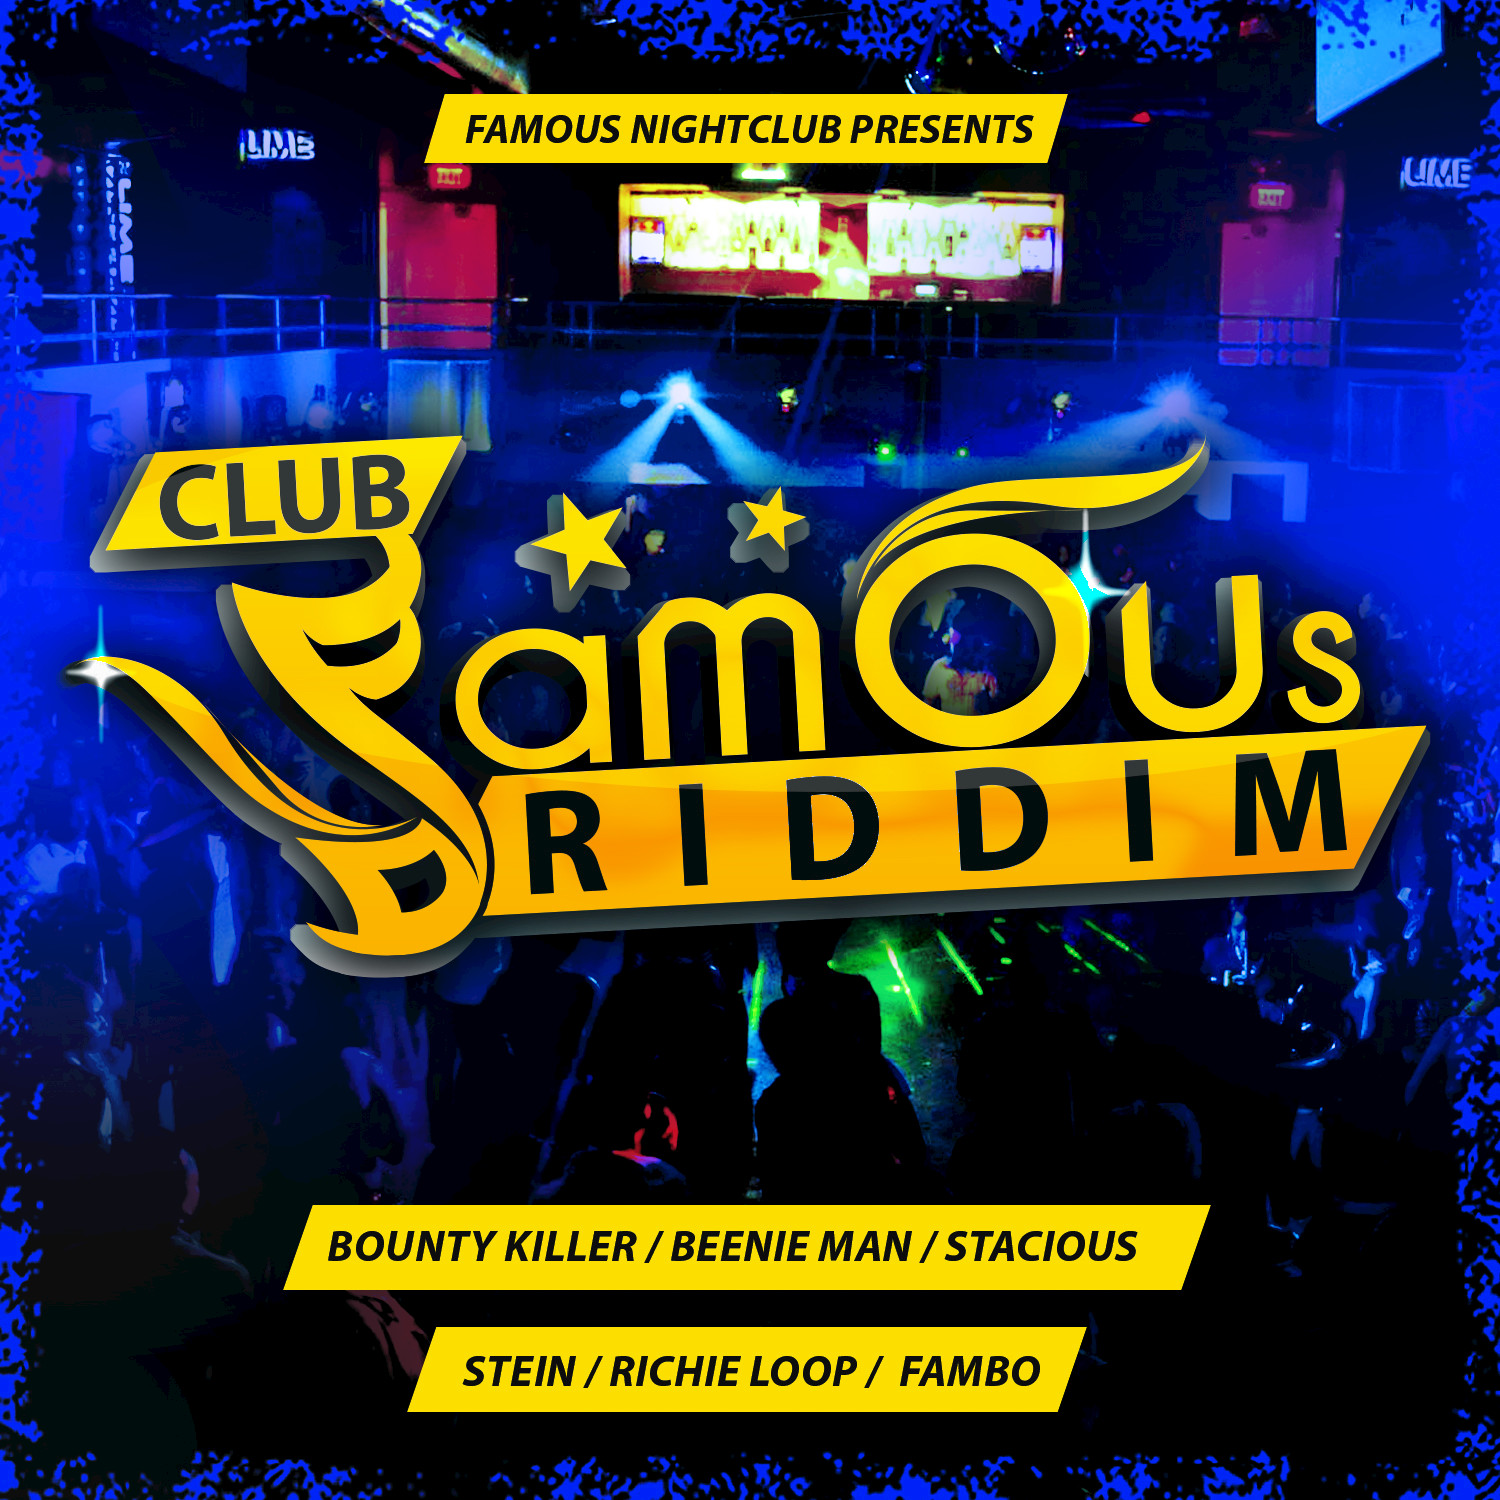 Club Famous Riddim